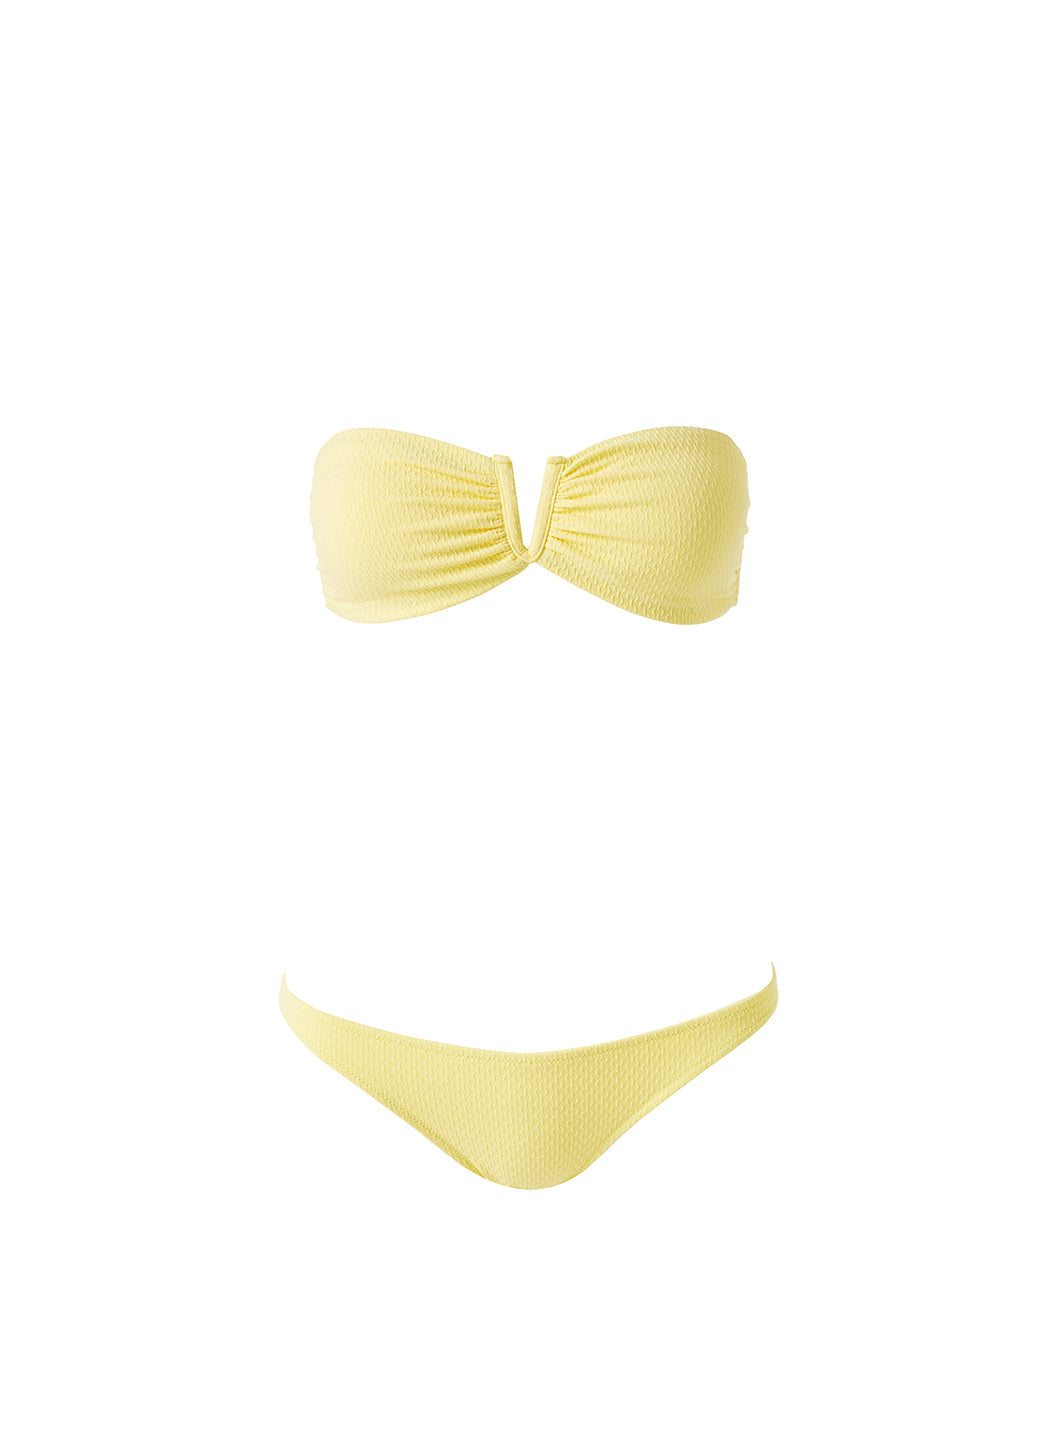 Alba_Yellow_Textured_Bikini_Cutout